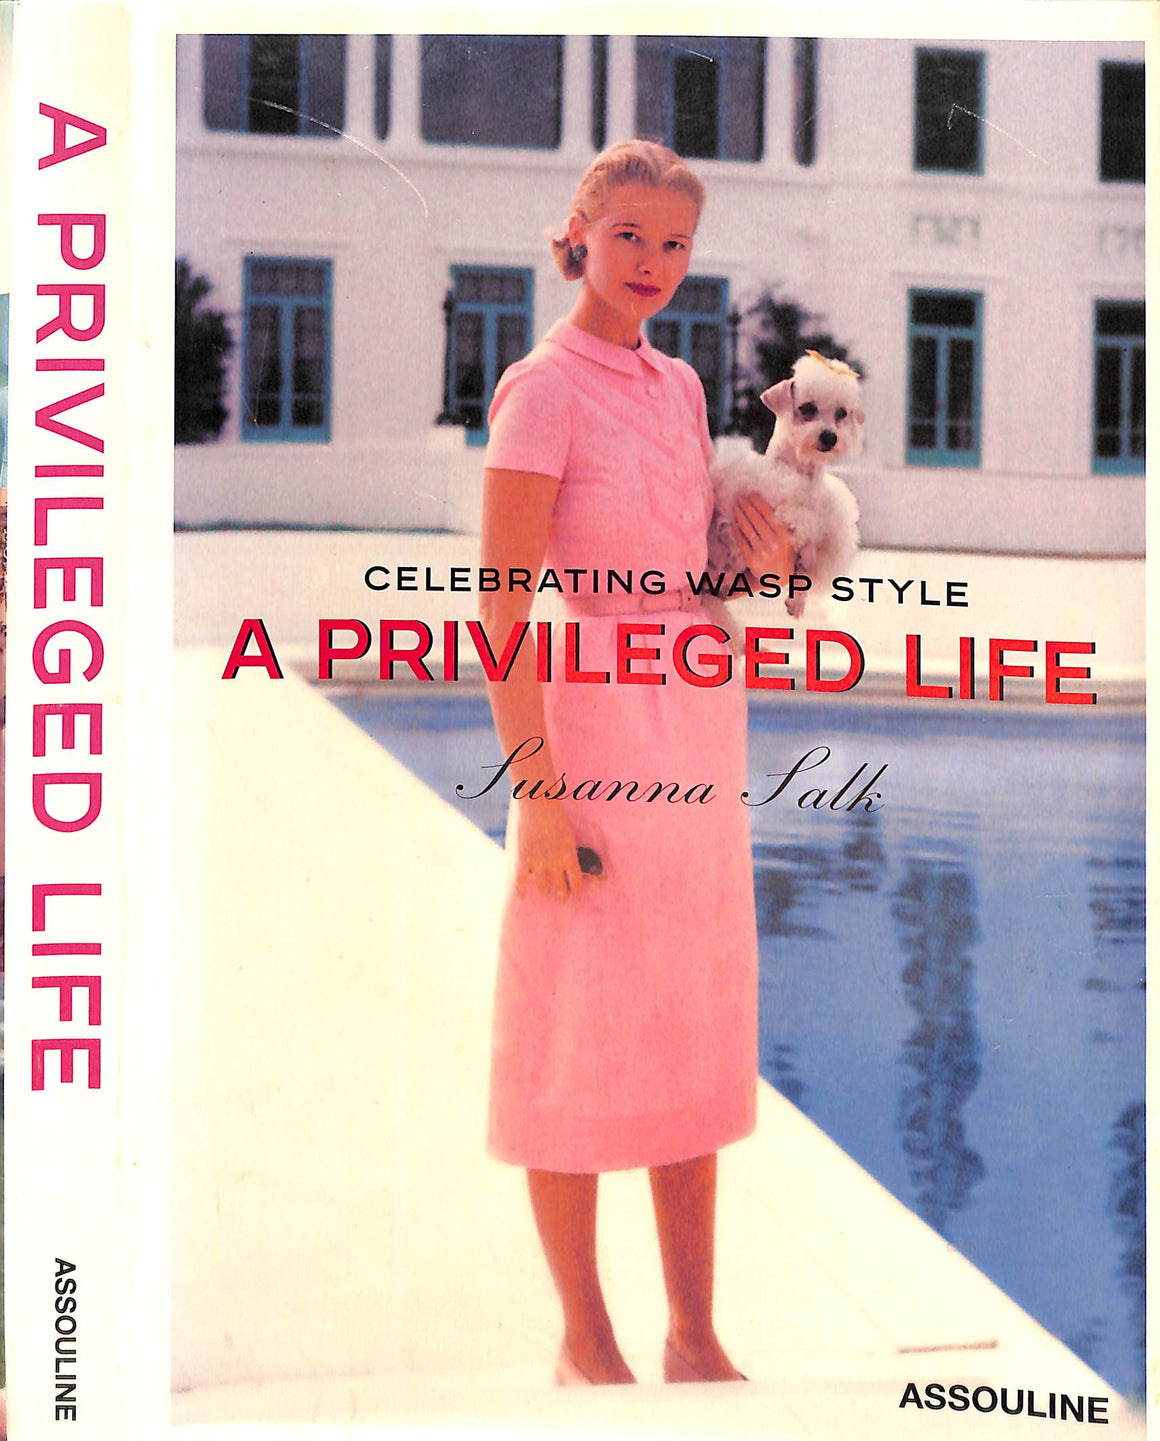 "A Privileged Life: Celebrating Wasp Style" 2007 SALK, Susanna